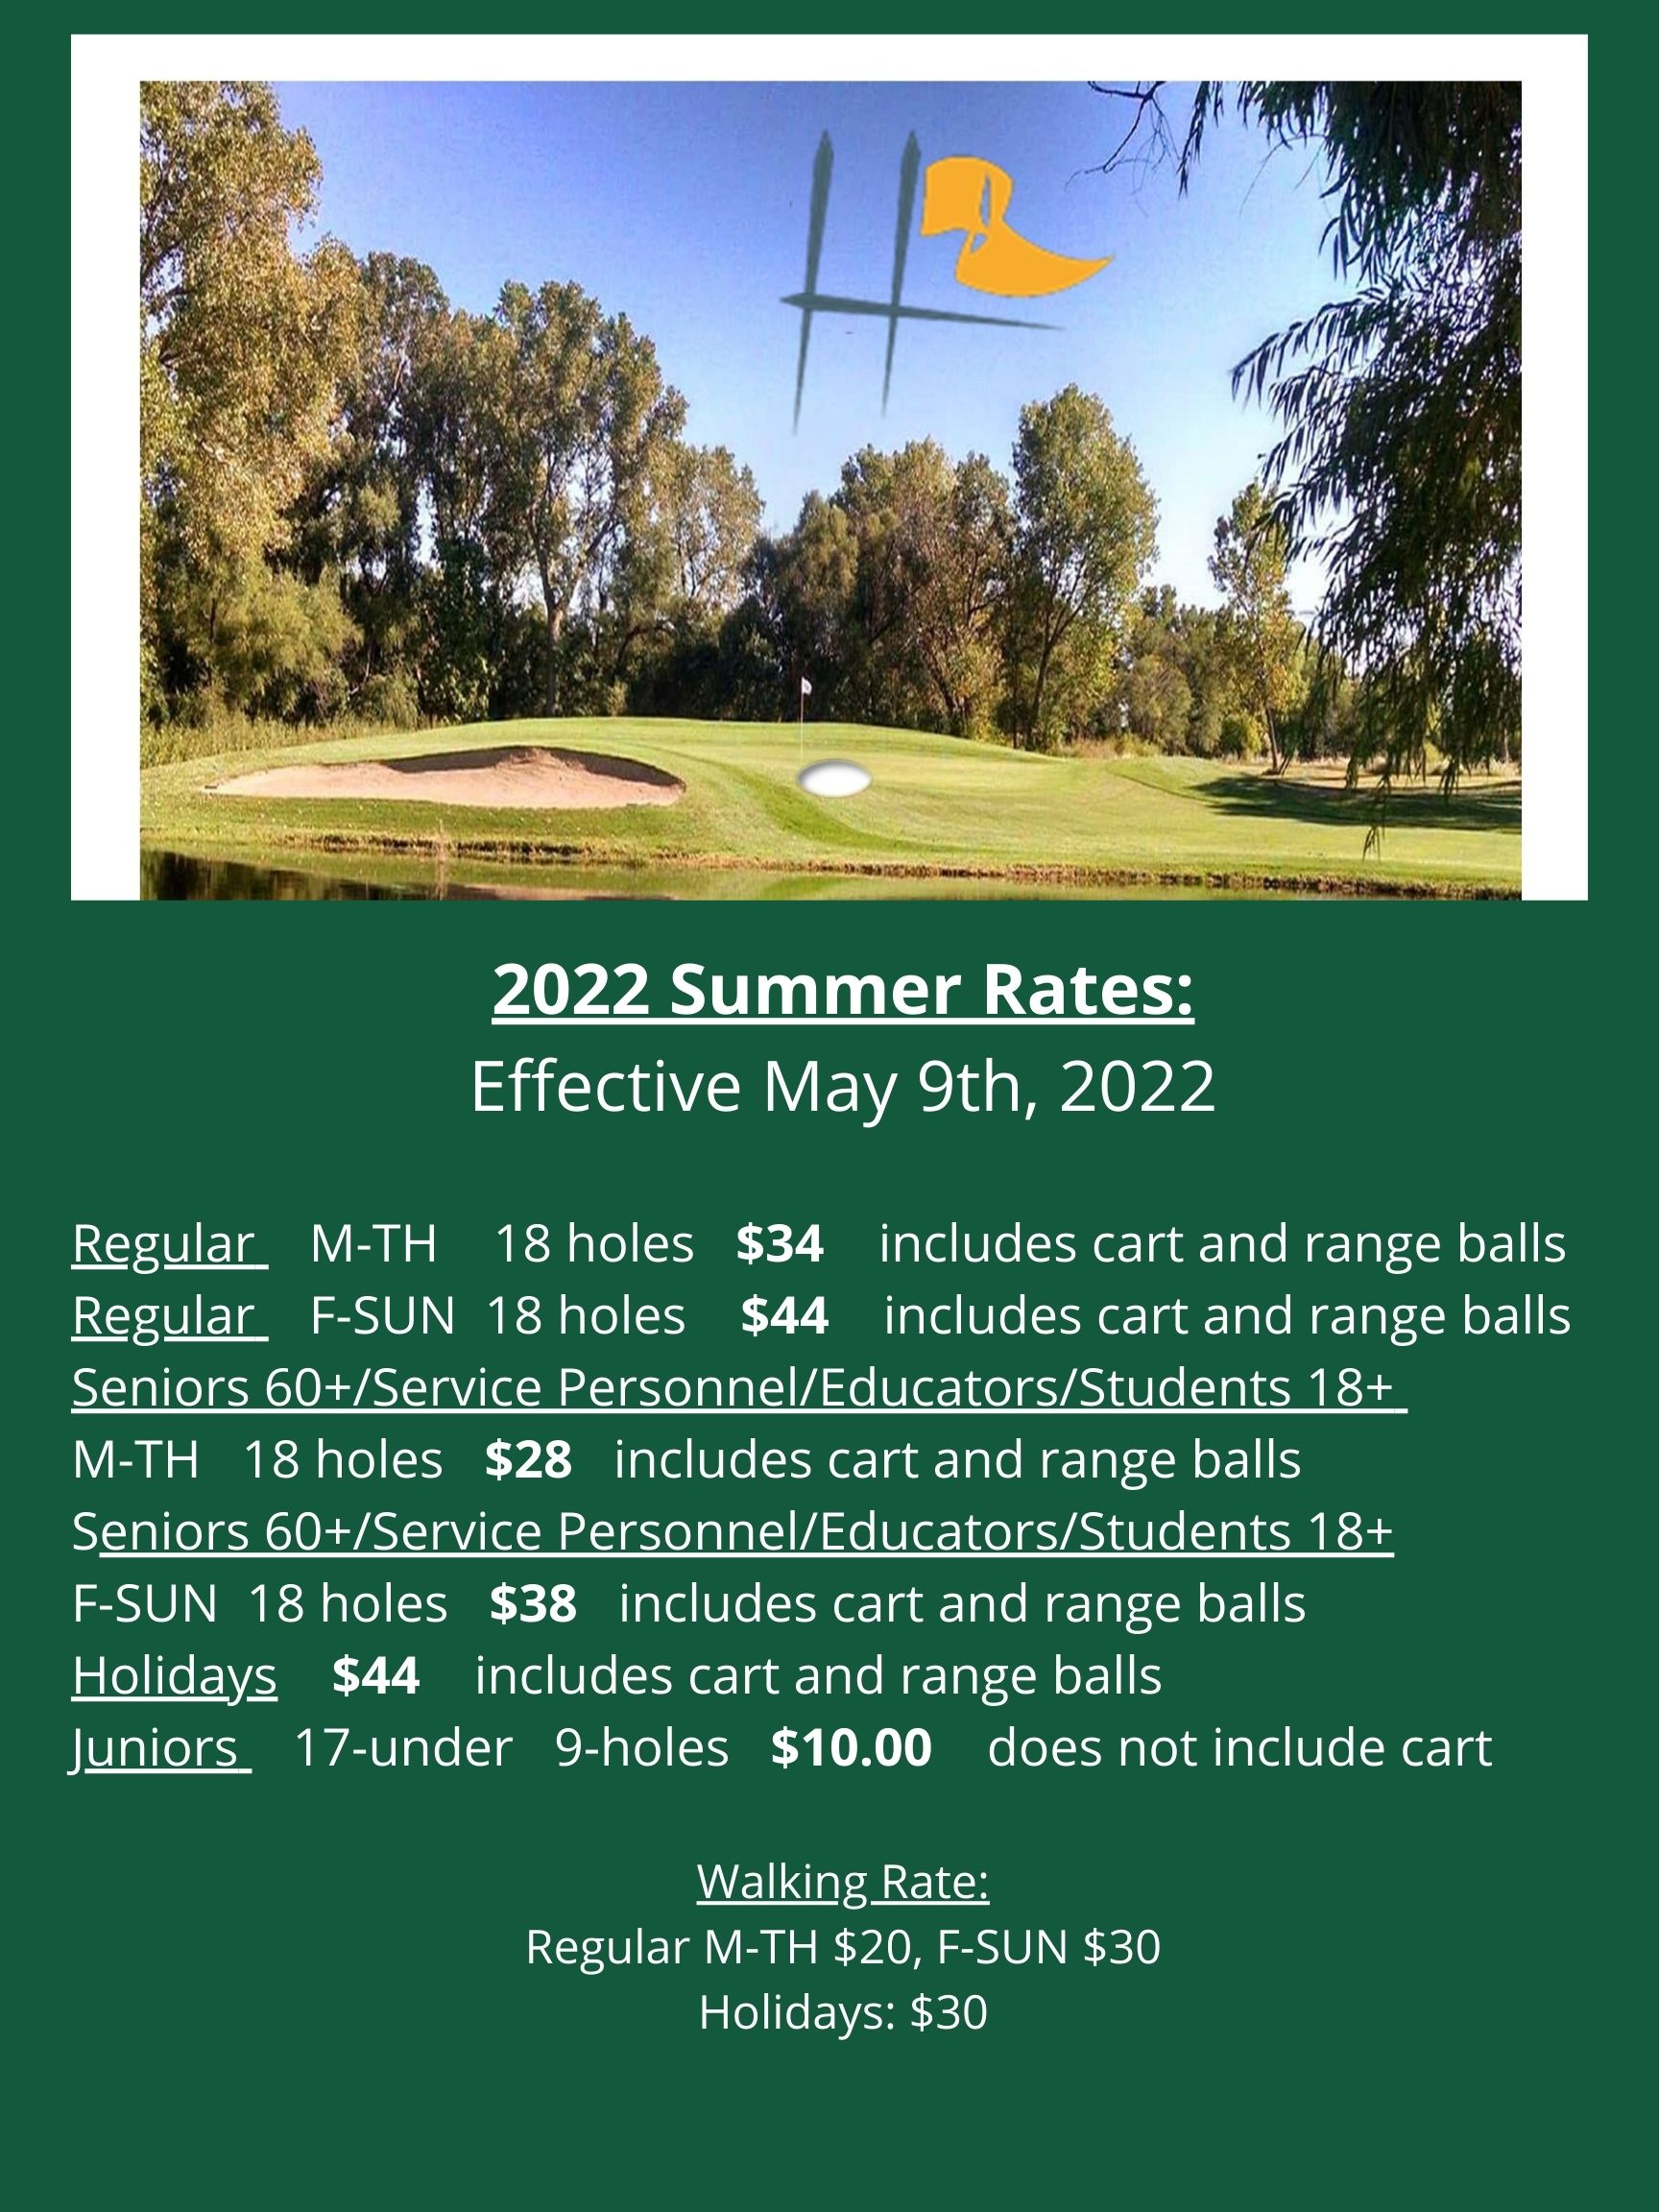 Hesston GOlf COurse 2022 Summer Rates 2